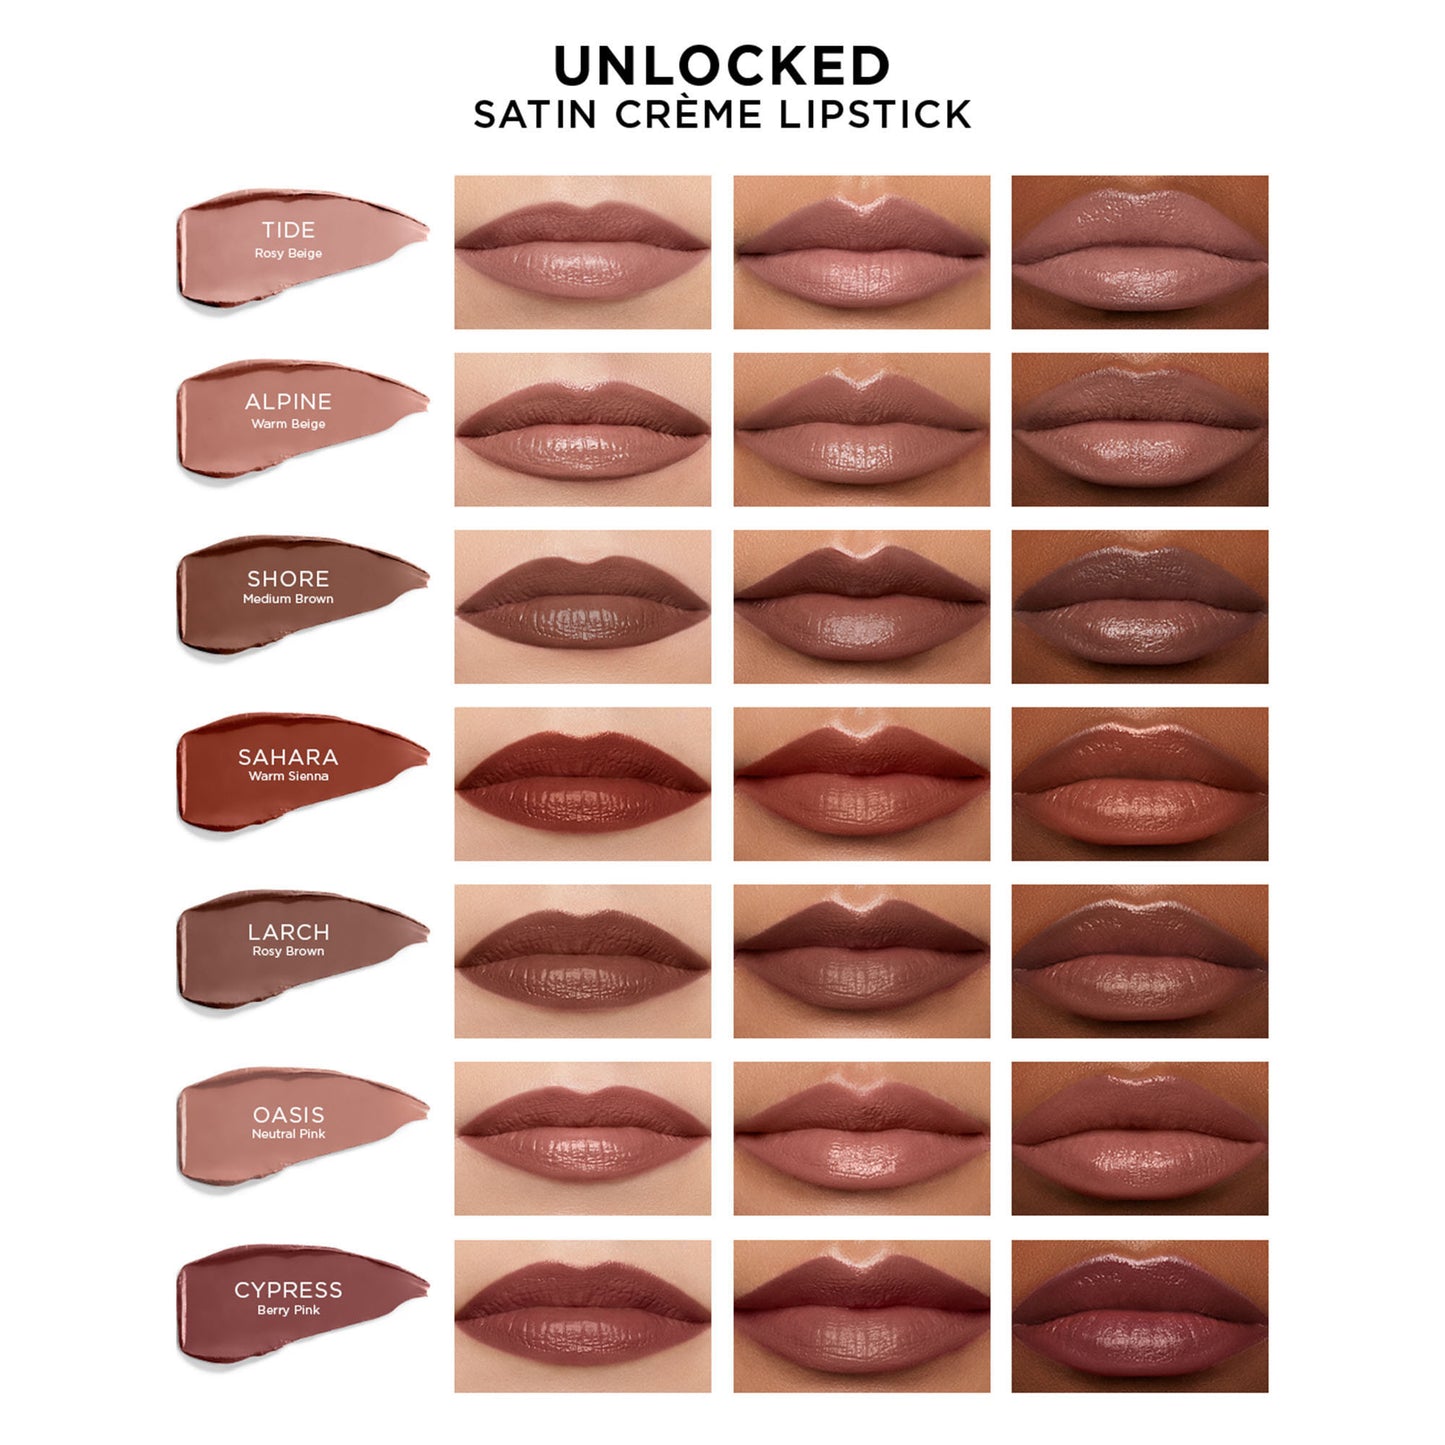 HOURGLASS Unlocked™ satin créme lipstick